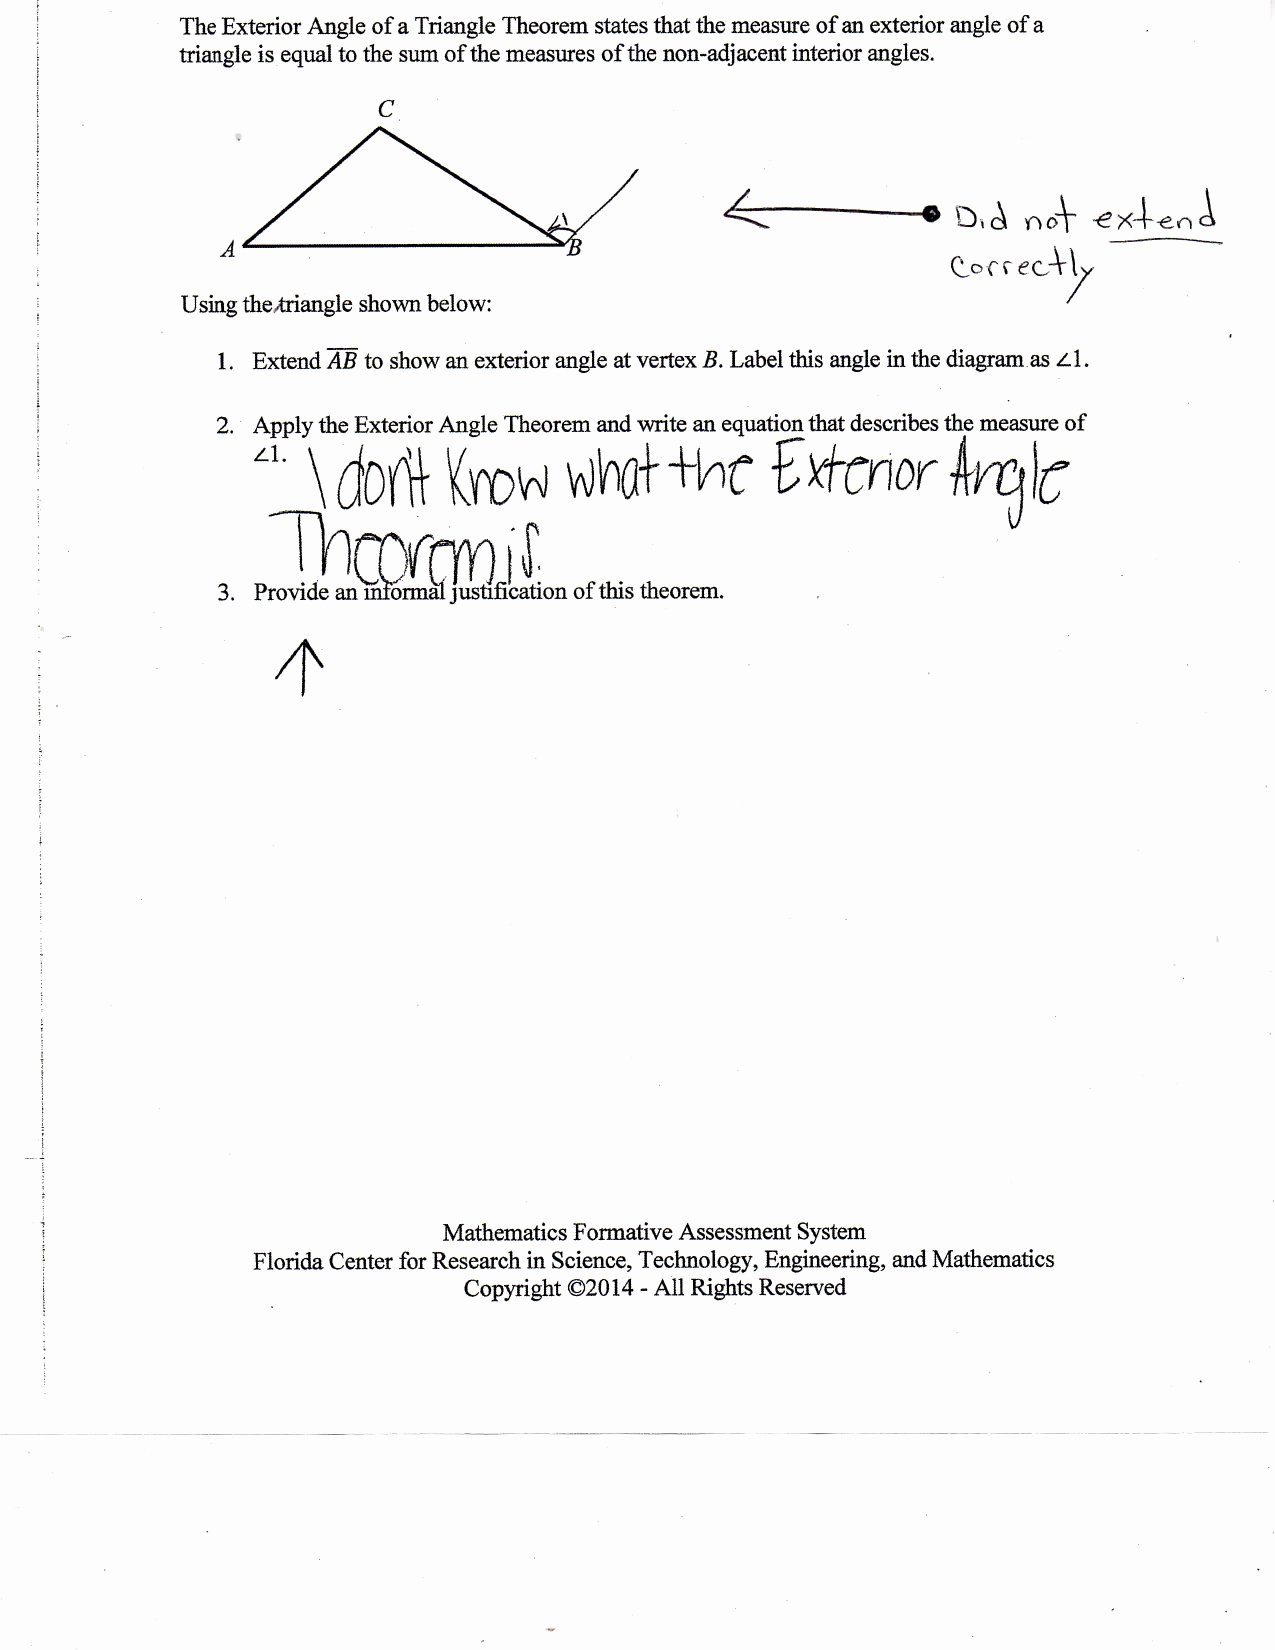 Exterior Angle theorem Worksheet Inspirational Triangle Sum and Exterior Angle theorem Worksheet